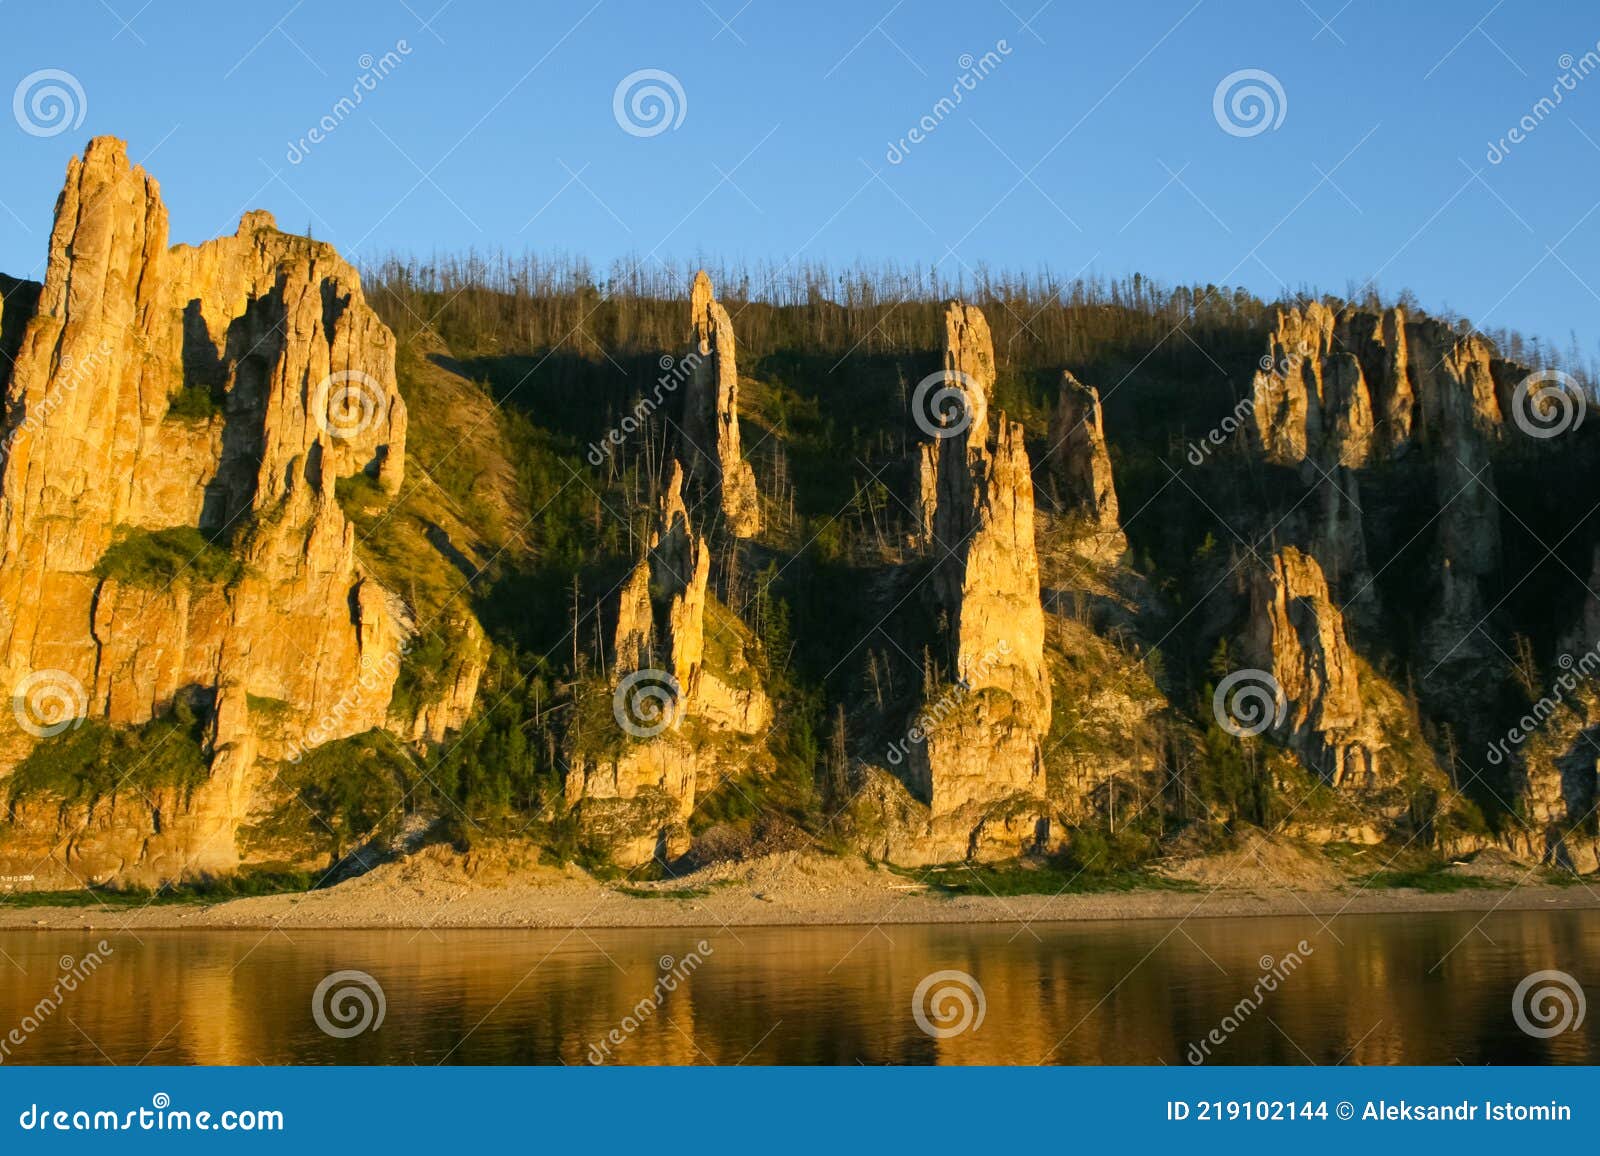 Lena Pillars Nature Of Eastern Siberia Stock Photo Image Of Heritage